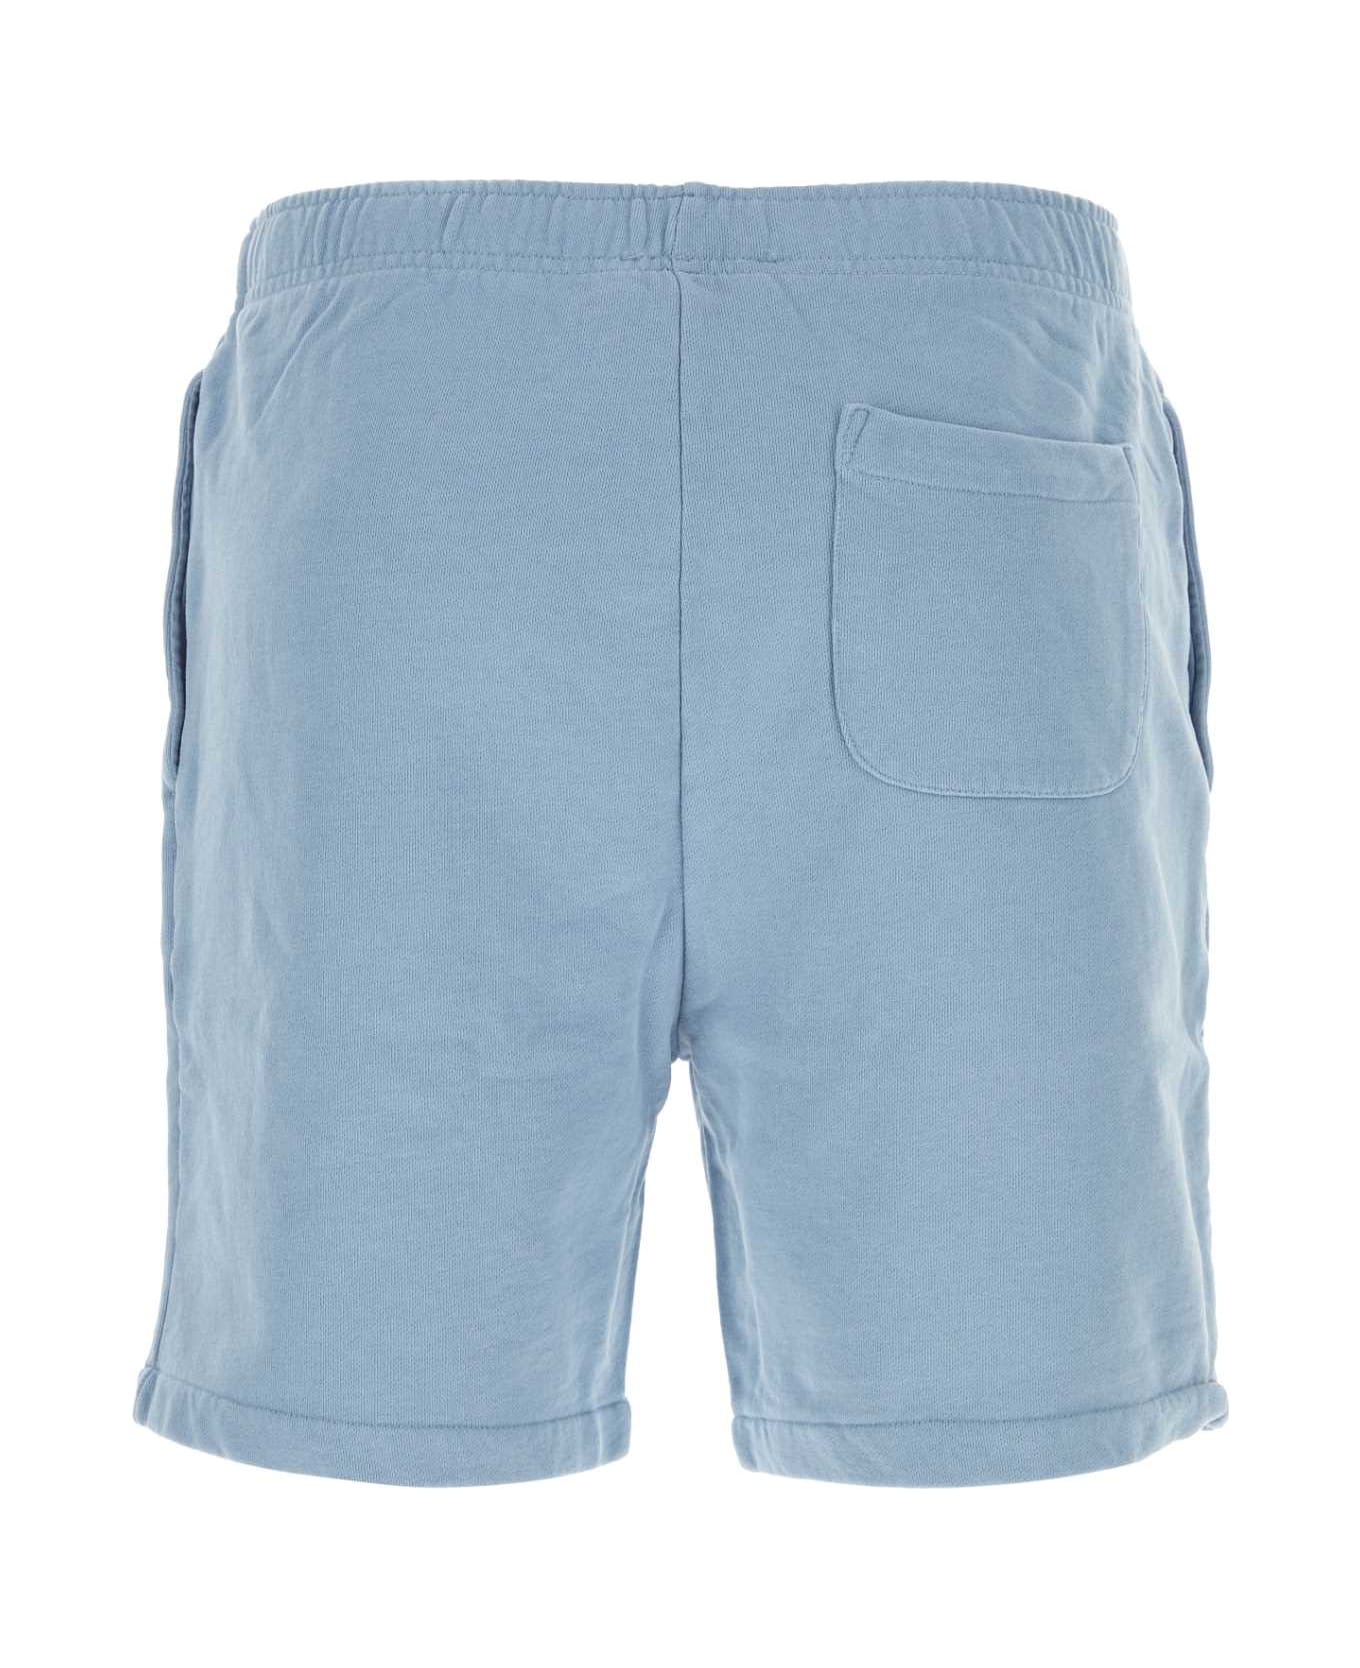 Polo Ralph Lauren Light Blue Cotton Bermuda Shorts - BLUE